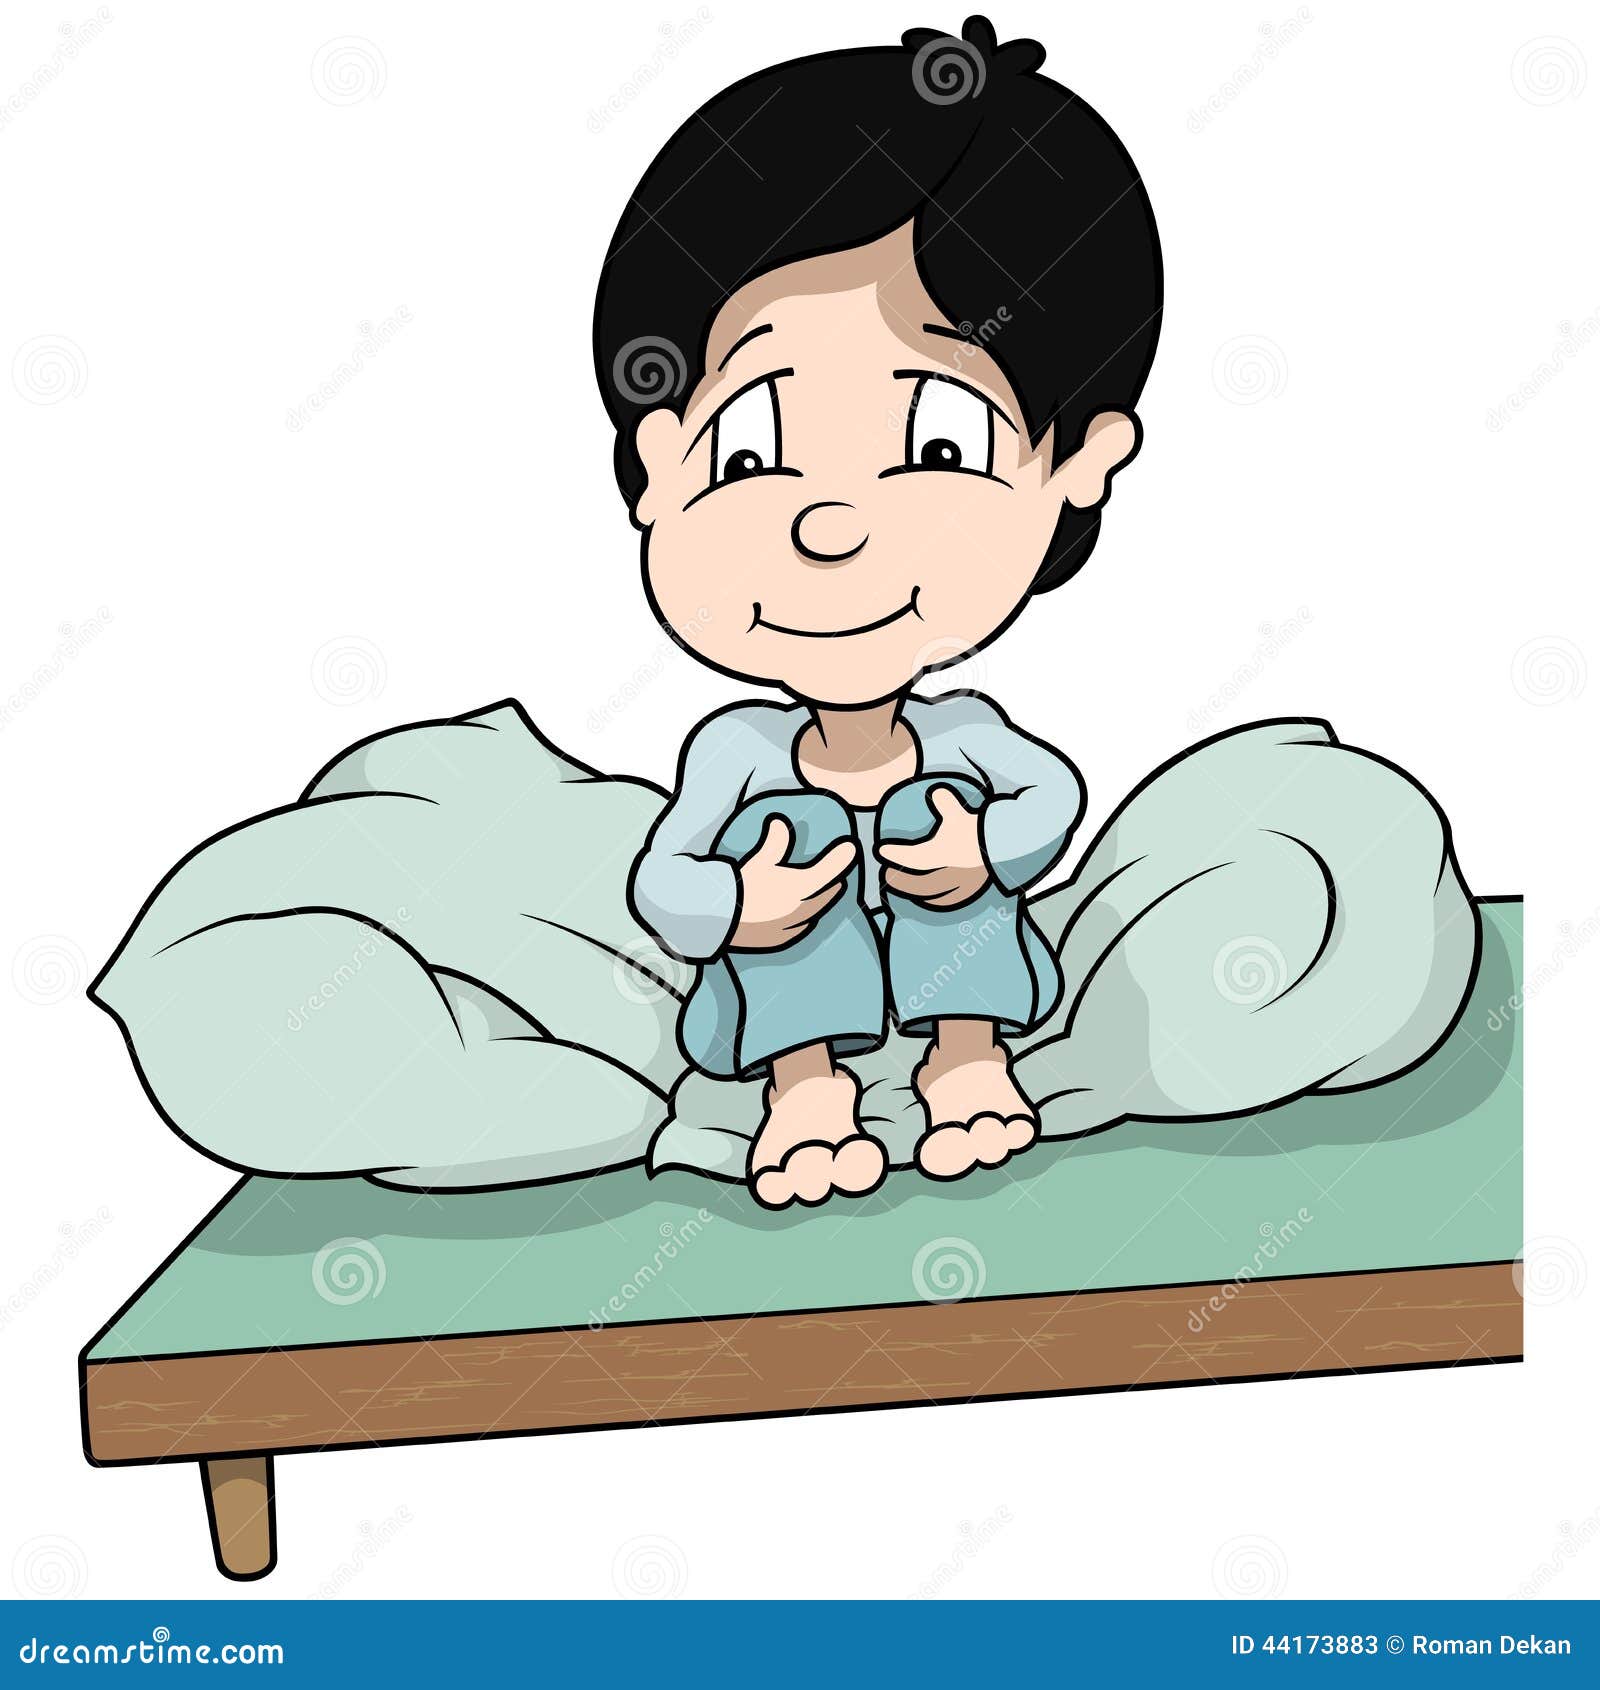 Cartoon Boy In Bed Images | Crazy Gallery